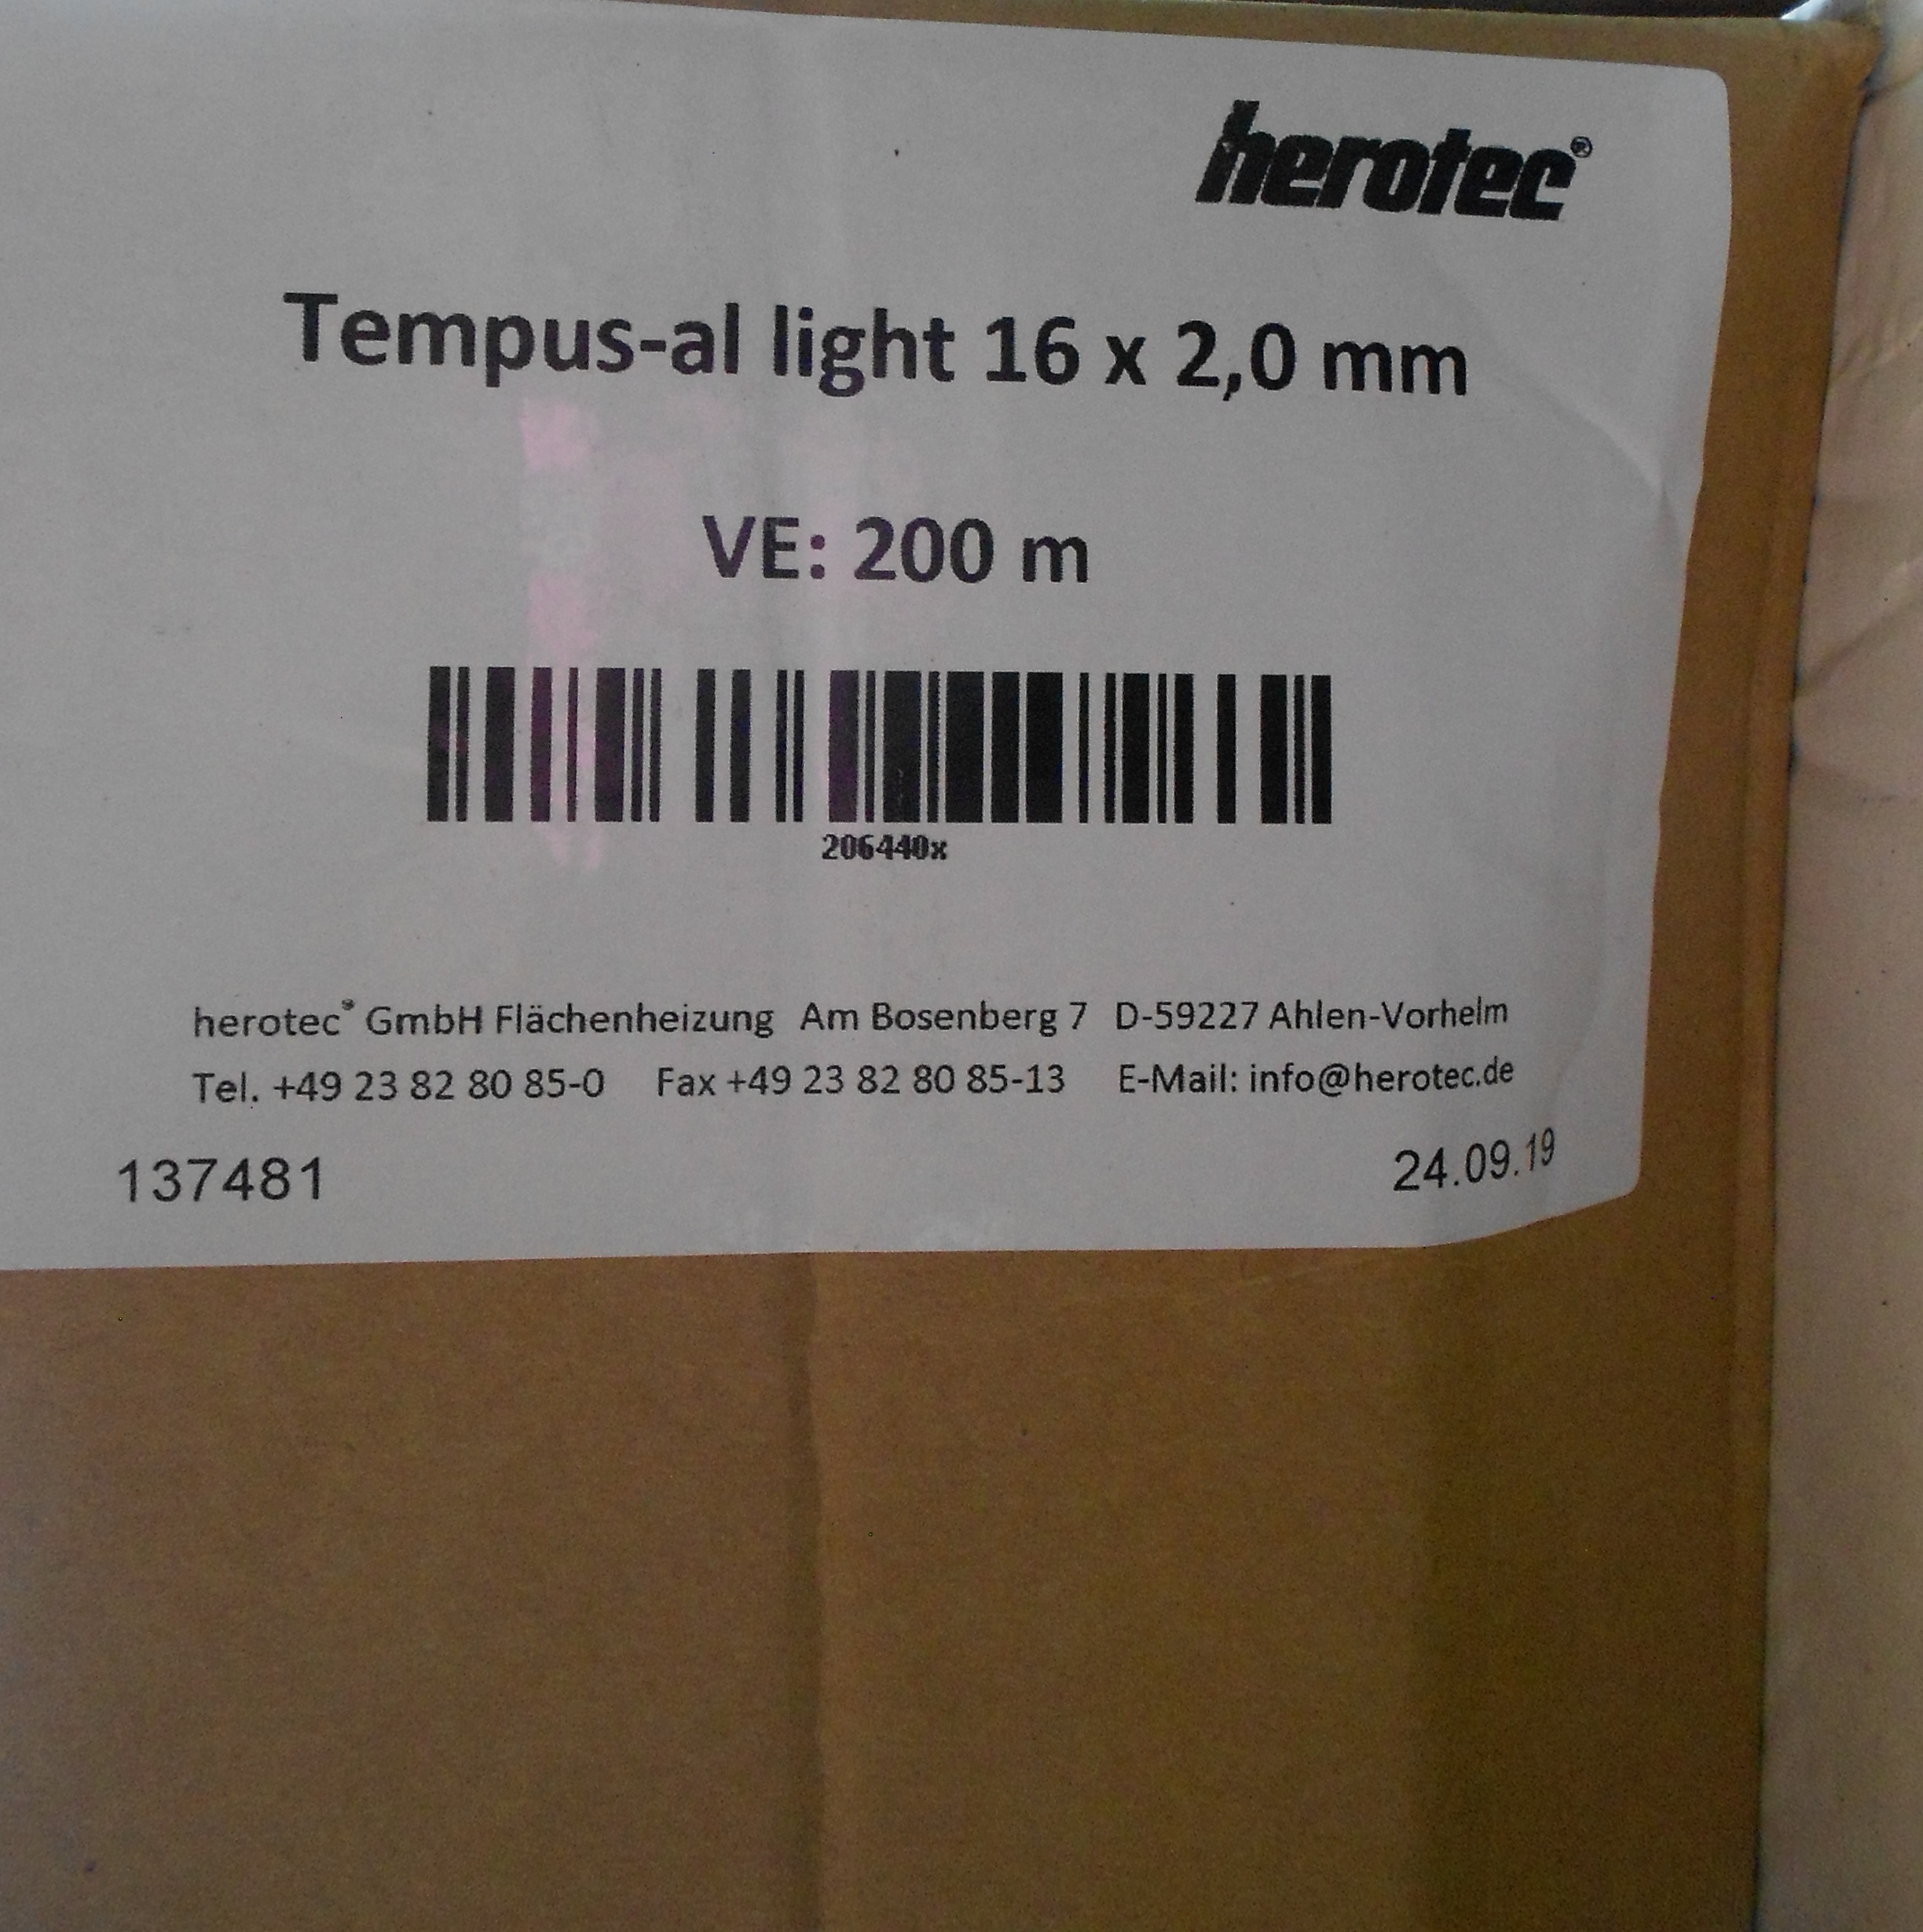 Herotec Tempus-al light 16 x 2 mm Fussbodenheizung, Metall-Kunststoff-Rohr 200m